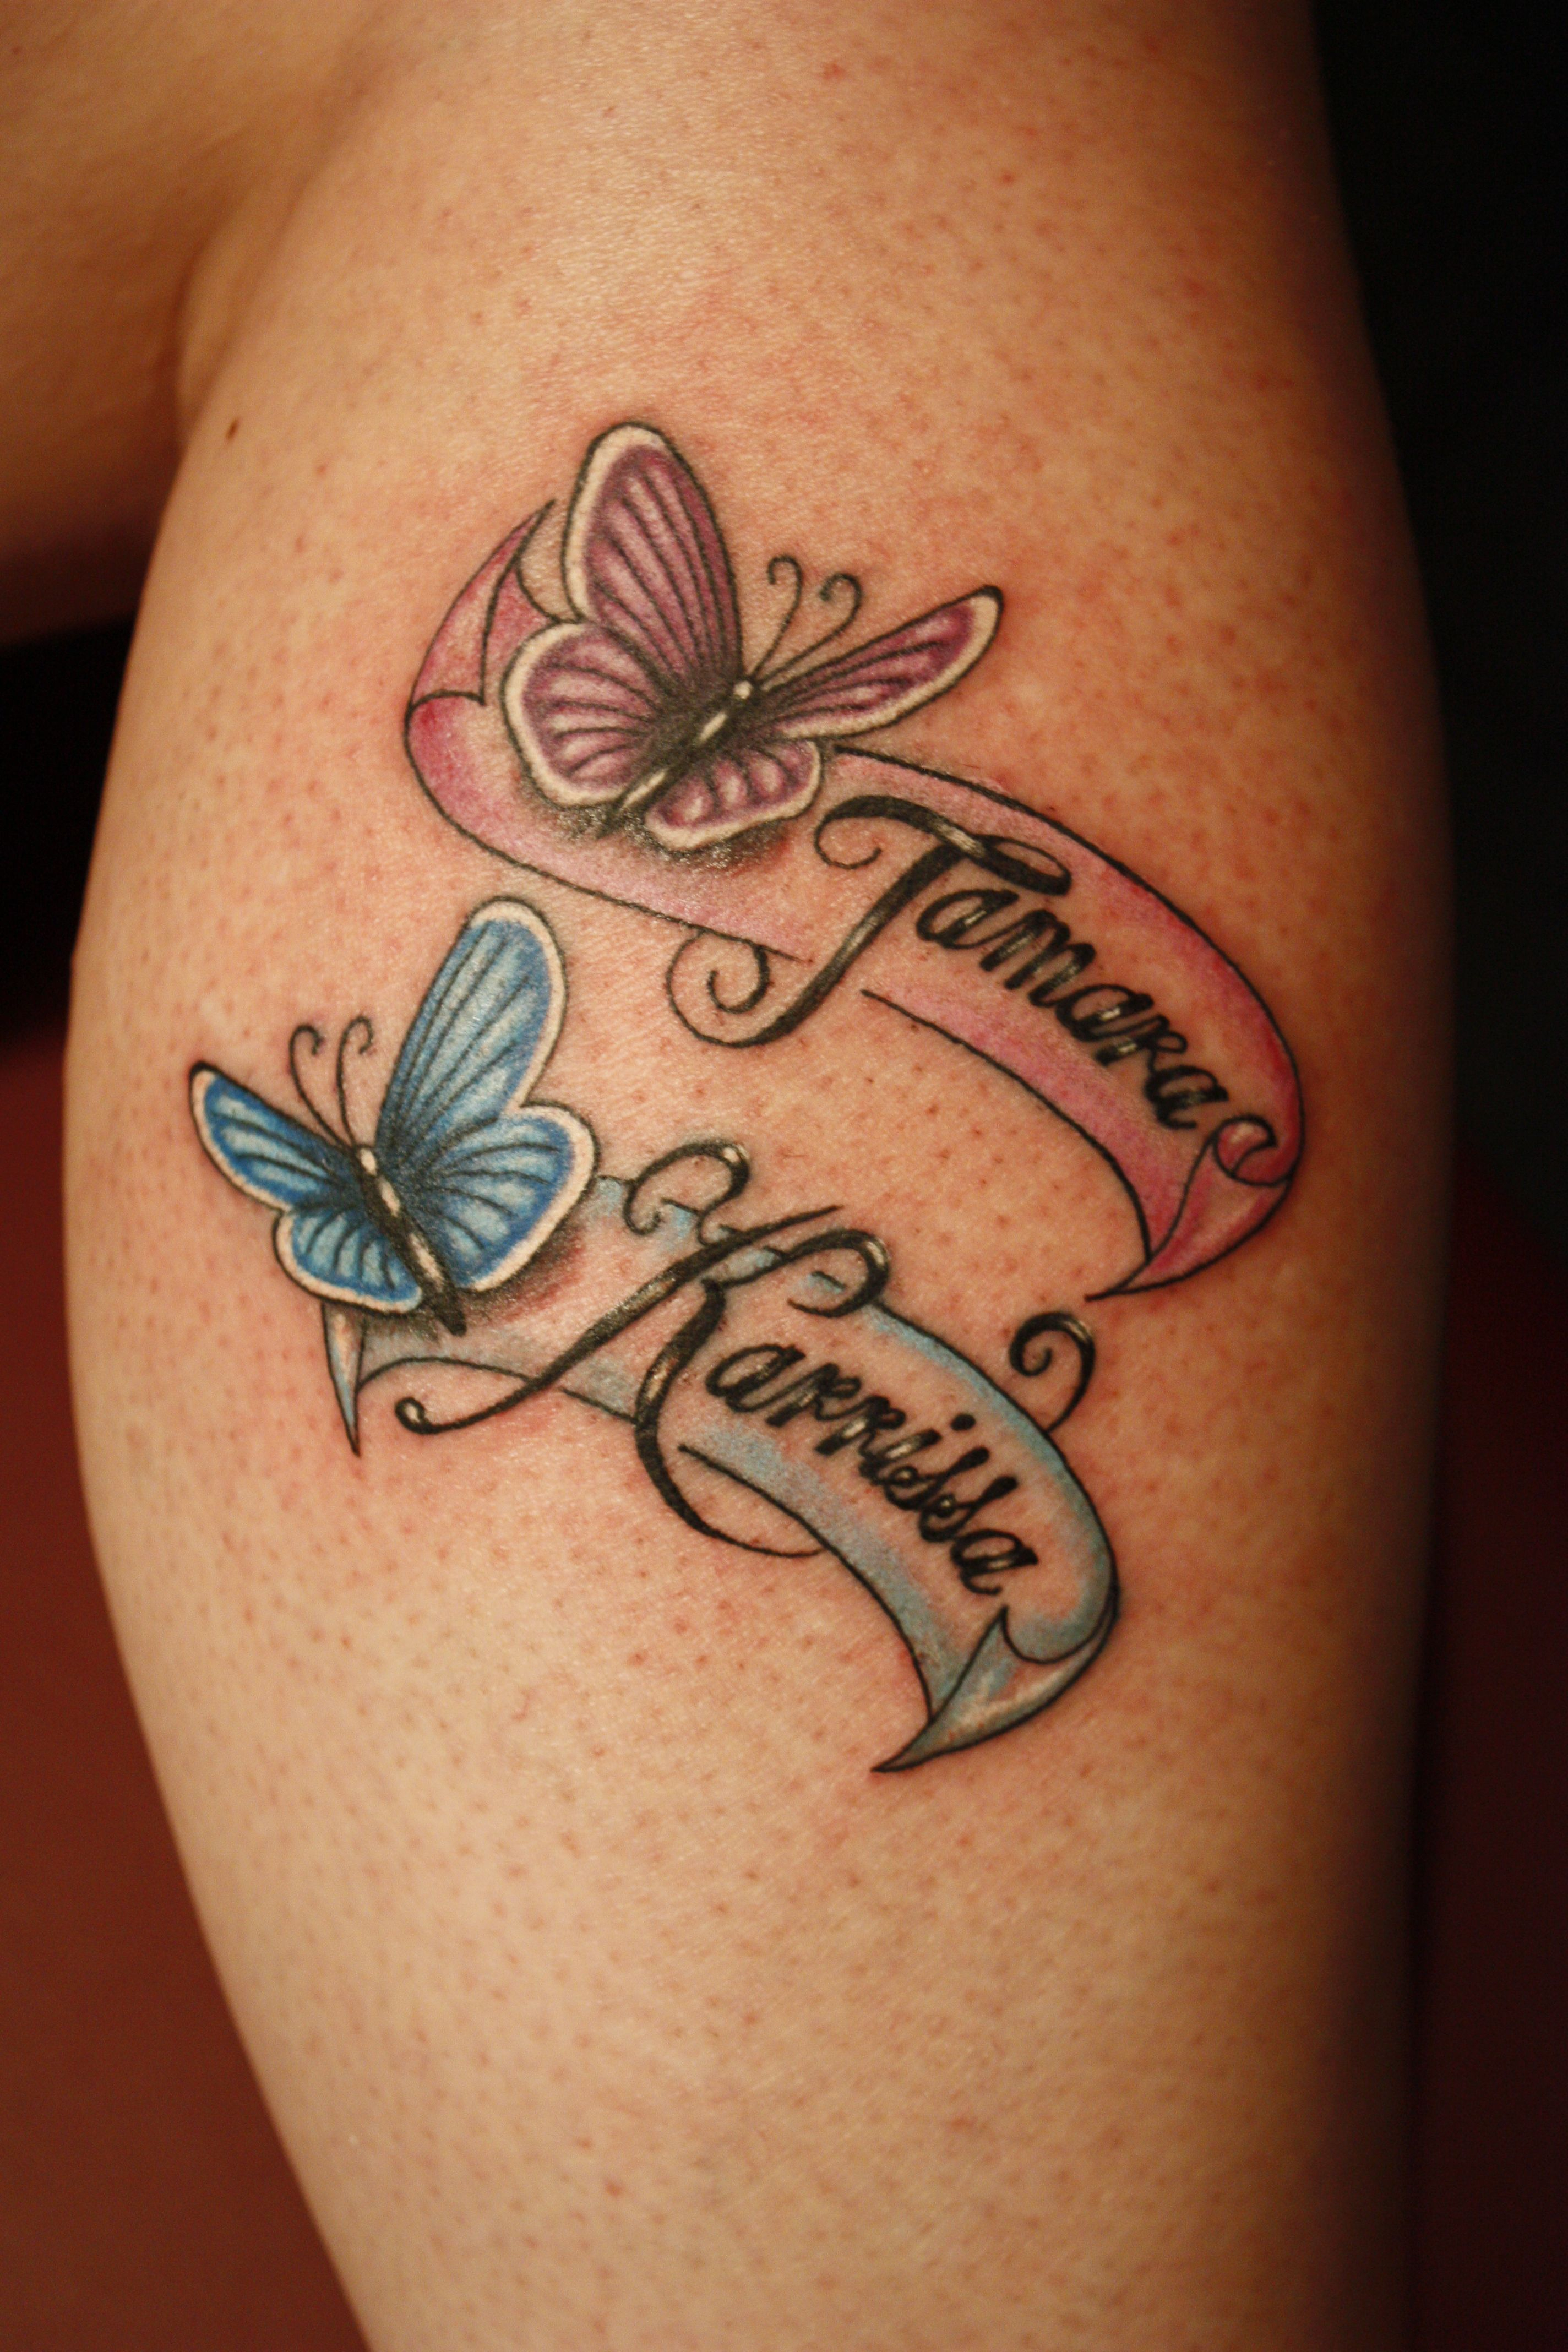 Butterfly Tattoo Tats Tattoos Name Tattoos Mom Tattoos pertaining to dimensions 2848 X 4272